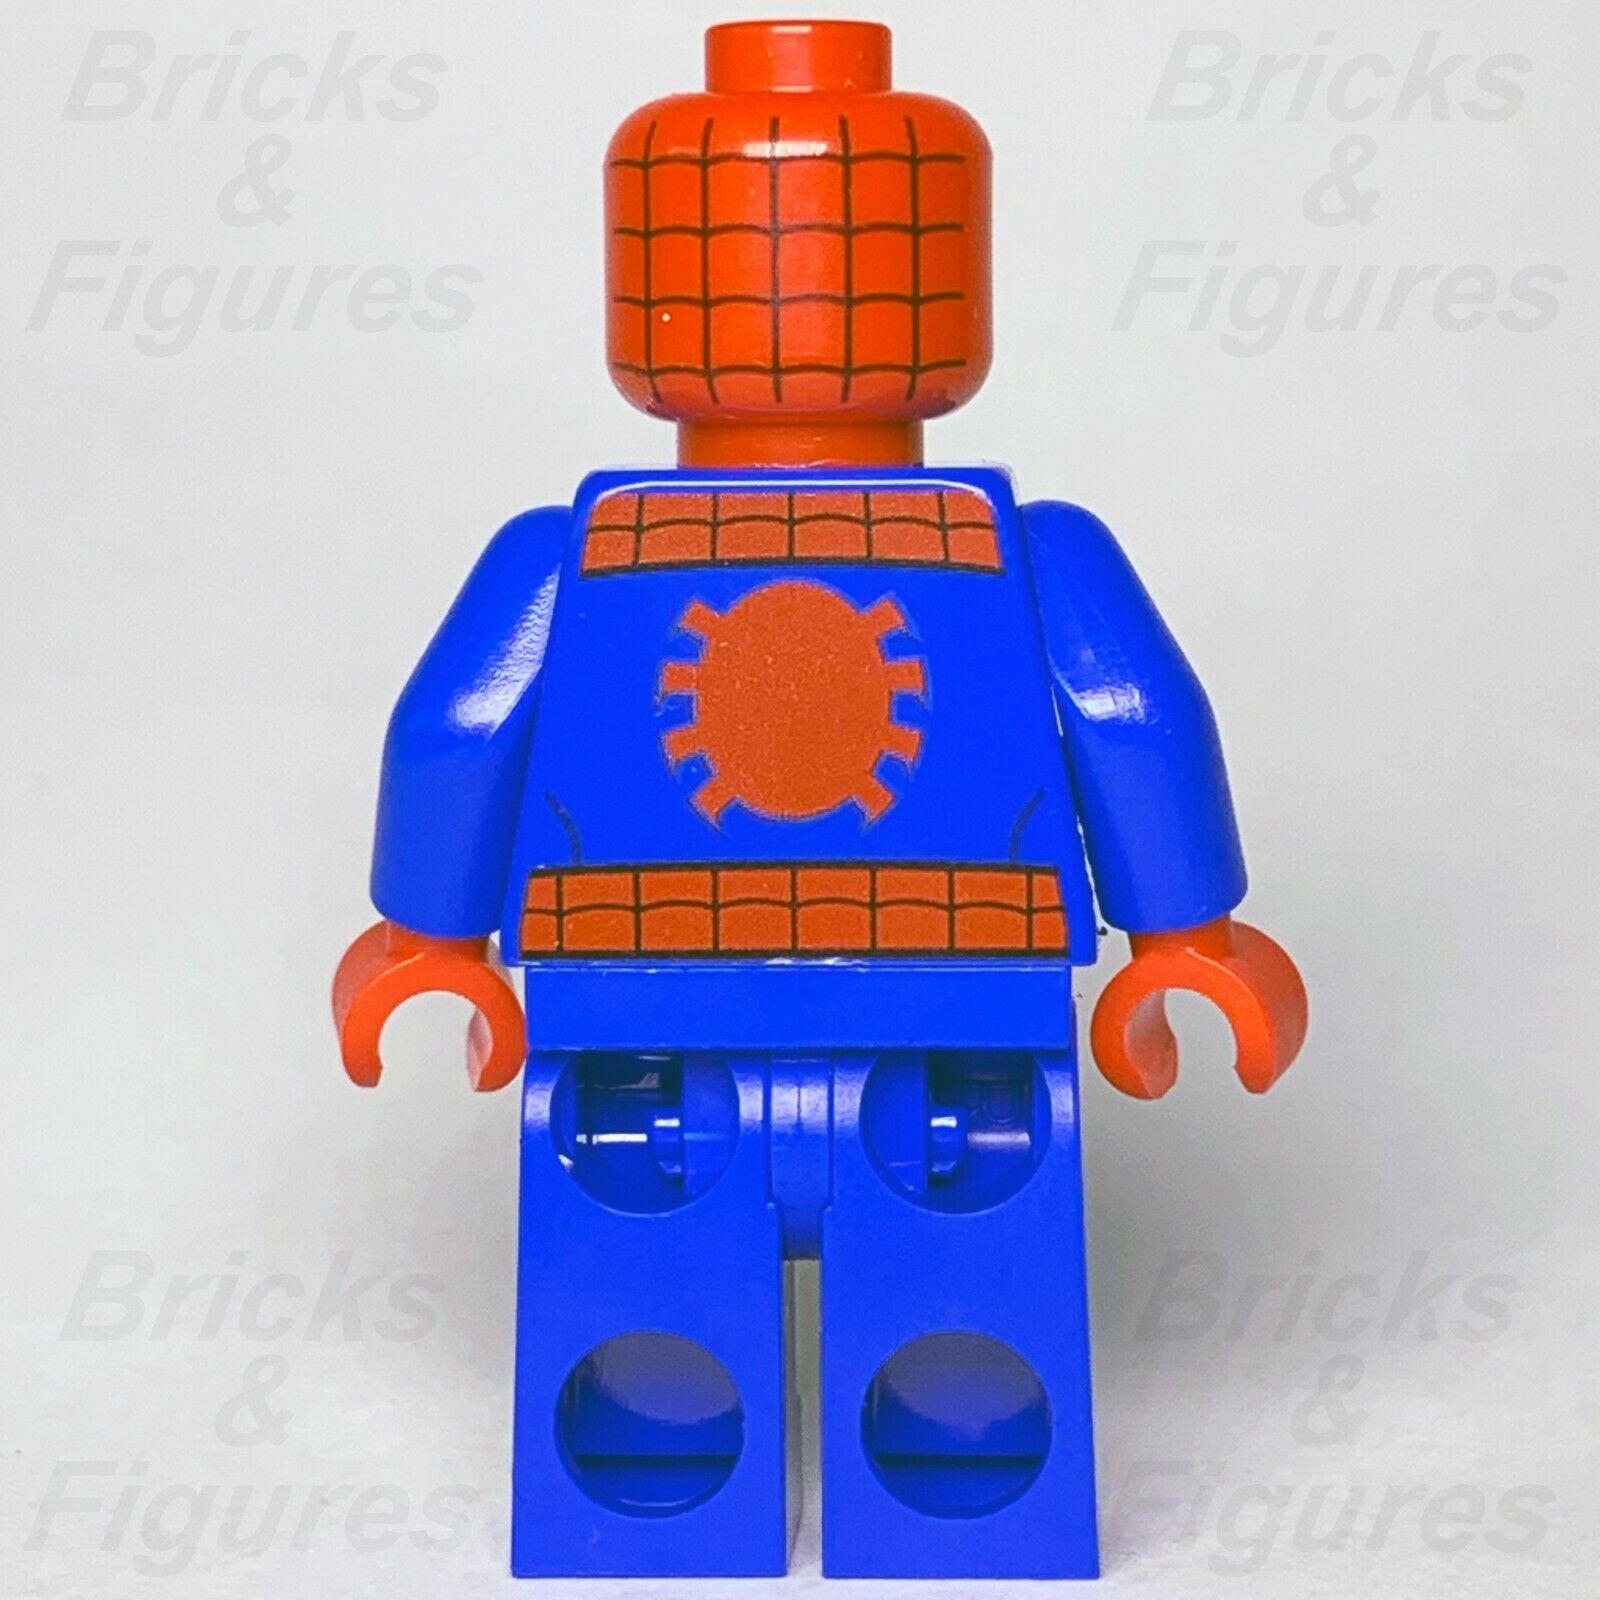 New Marvel Super Heroes LEGO Spider-Man Minifigure 30451 10754 76058 76059 6873 - Bricks & Figures